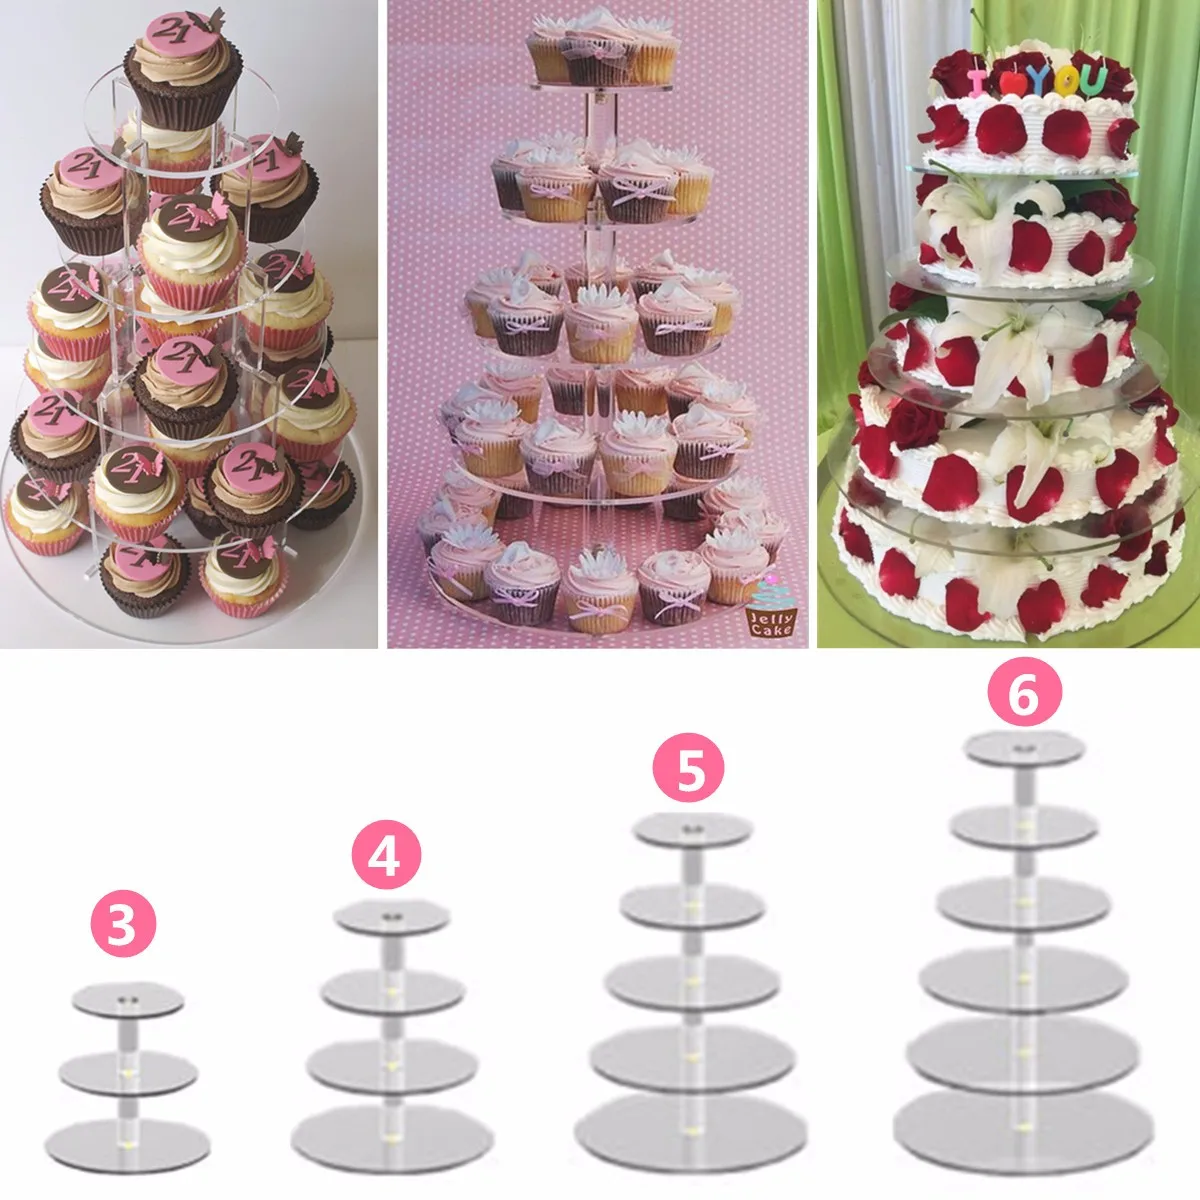 3-5 Tier Cake Stand Birthday Wedding Party Cupcake Tower Display Holder Decor SP 